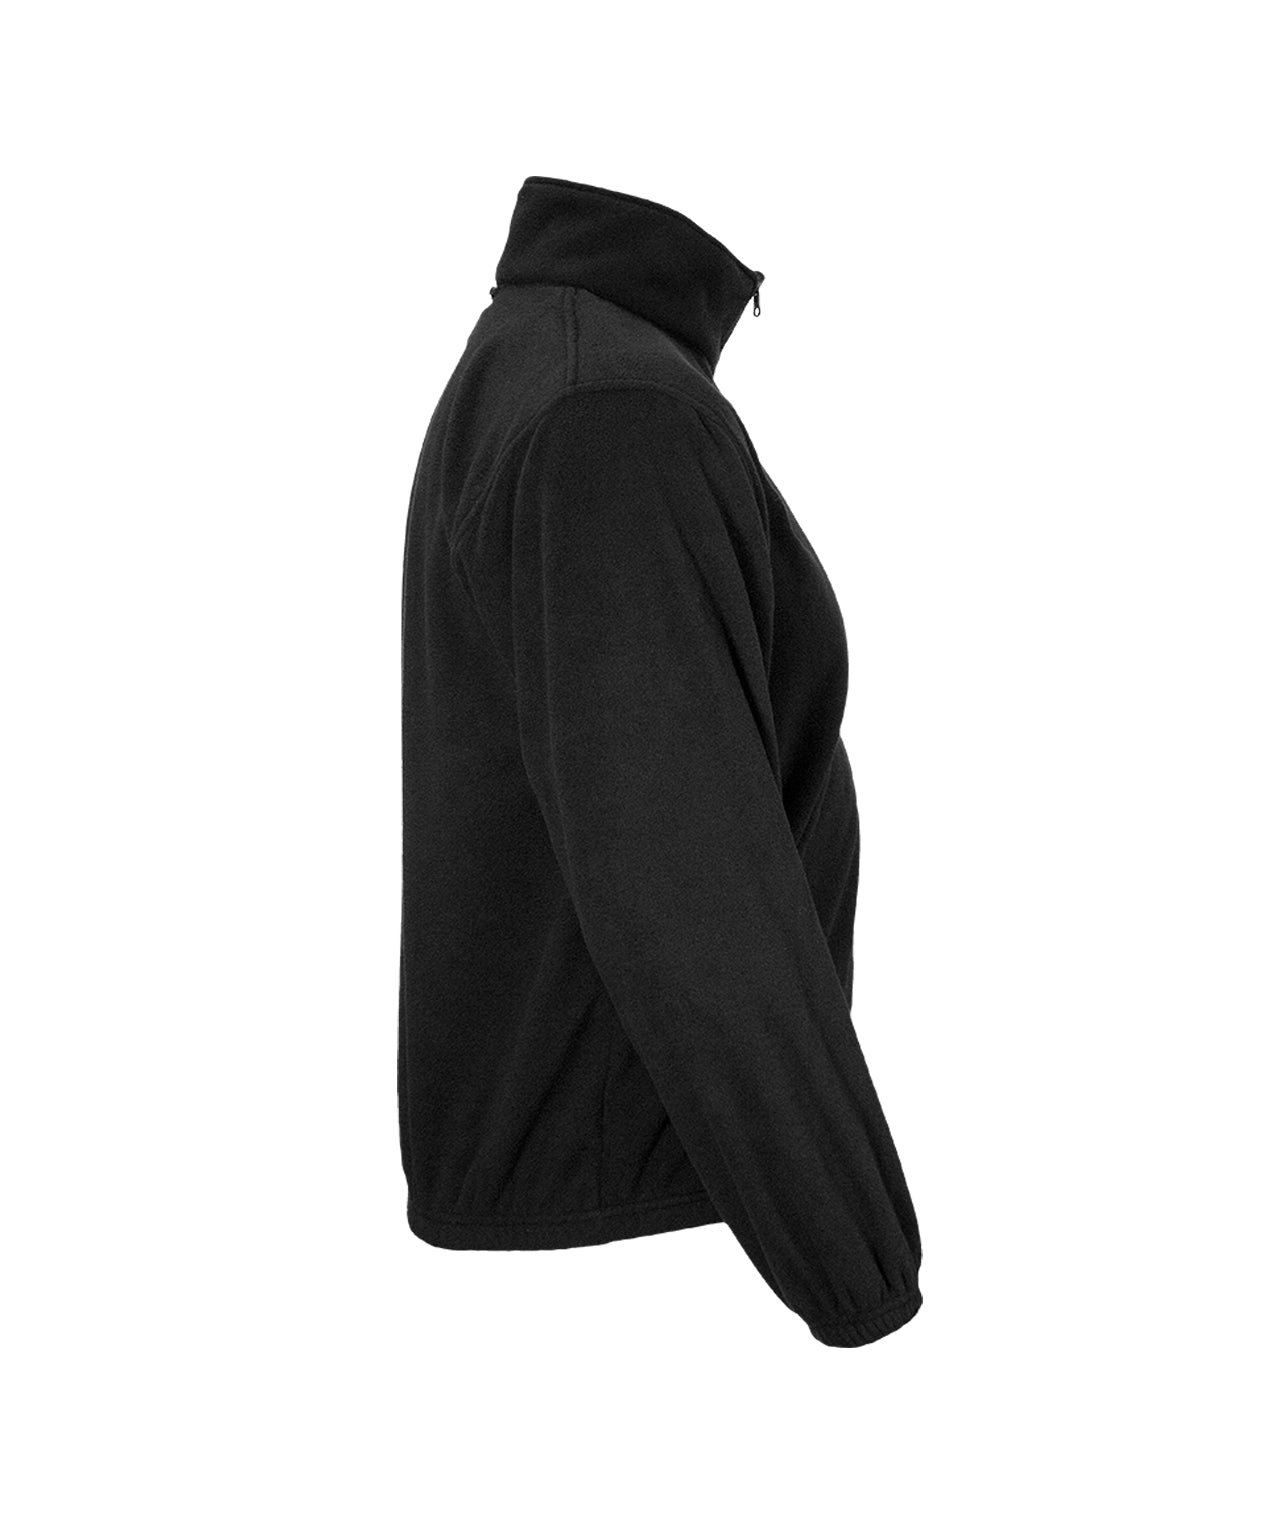 620NTBK Black 9oz Fleece Sweatshirt: Full Zip Liner for Systems Gear